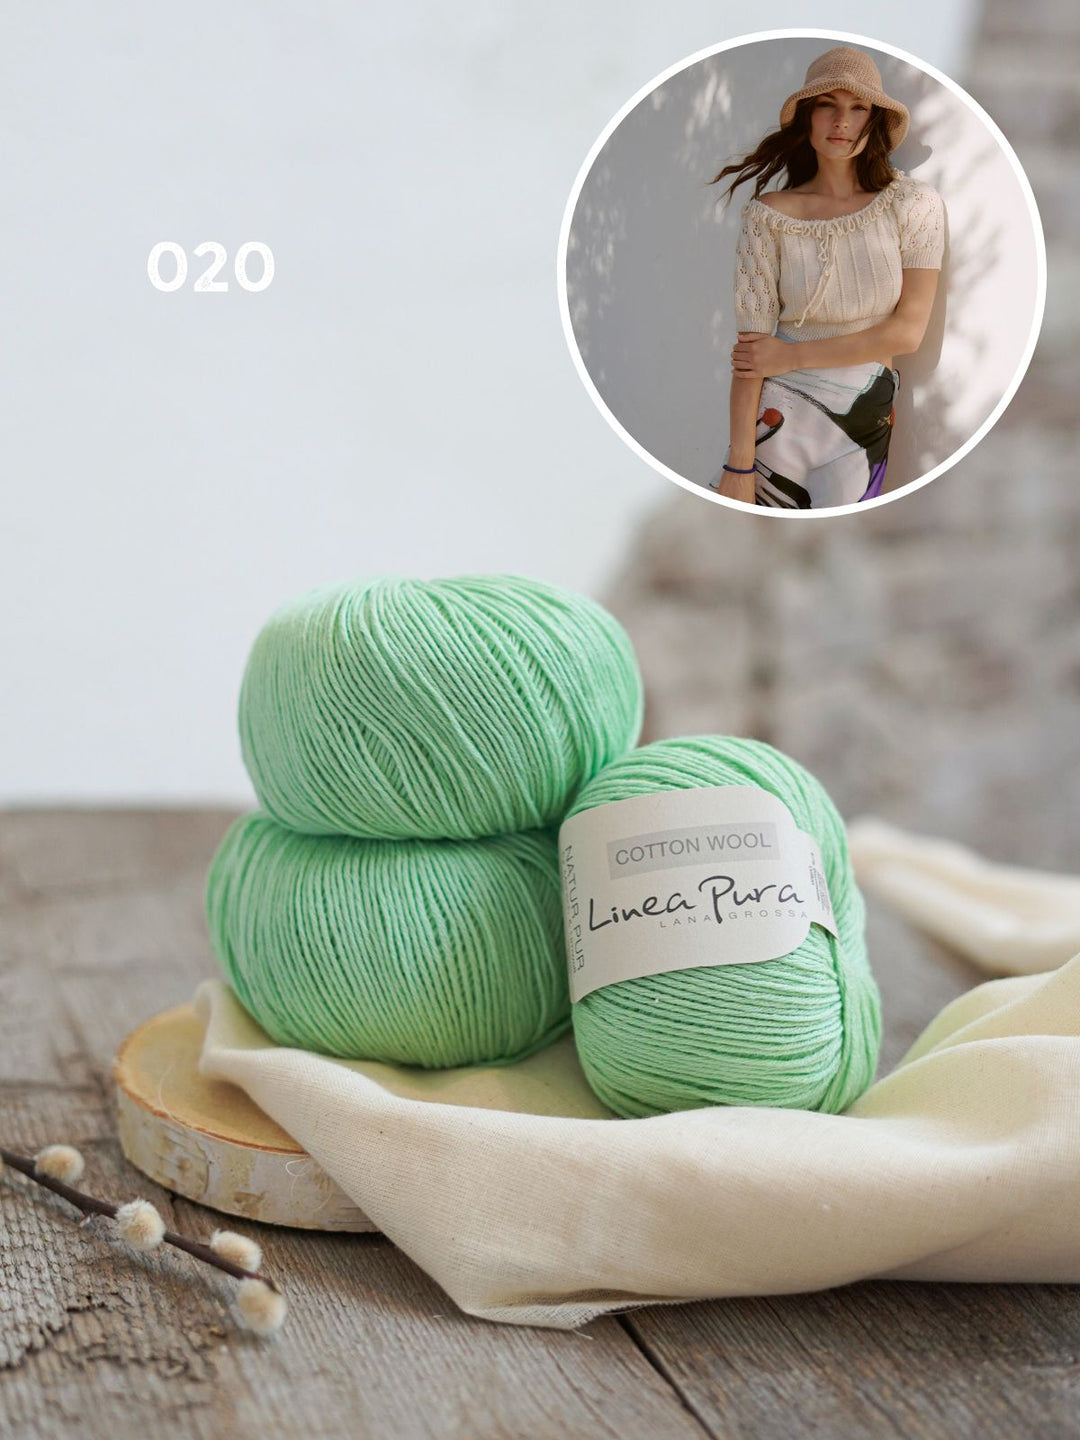 Breipakket Cotton Wool raglanpullover met ajourmouwen